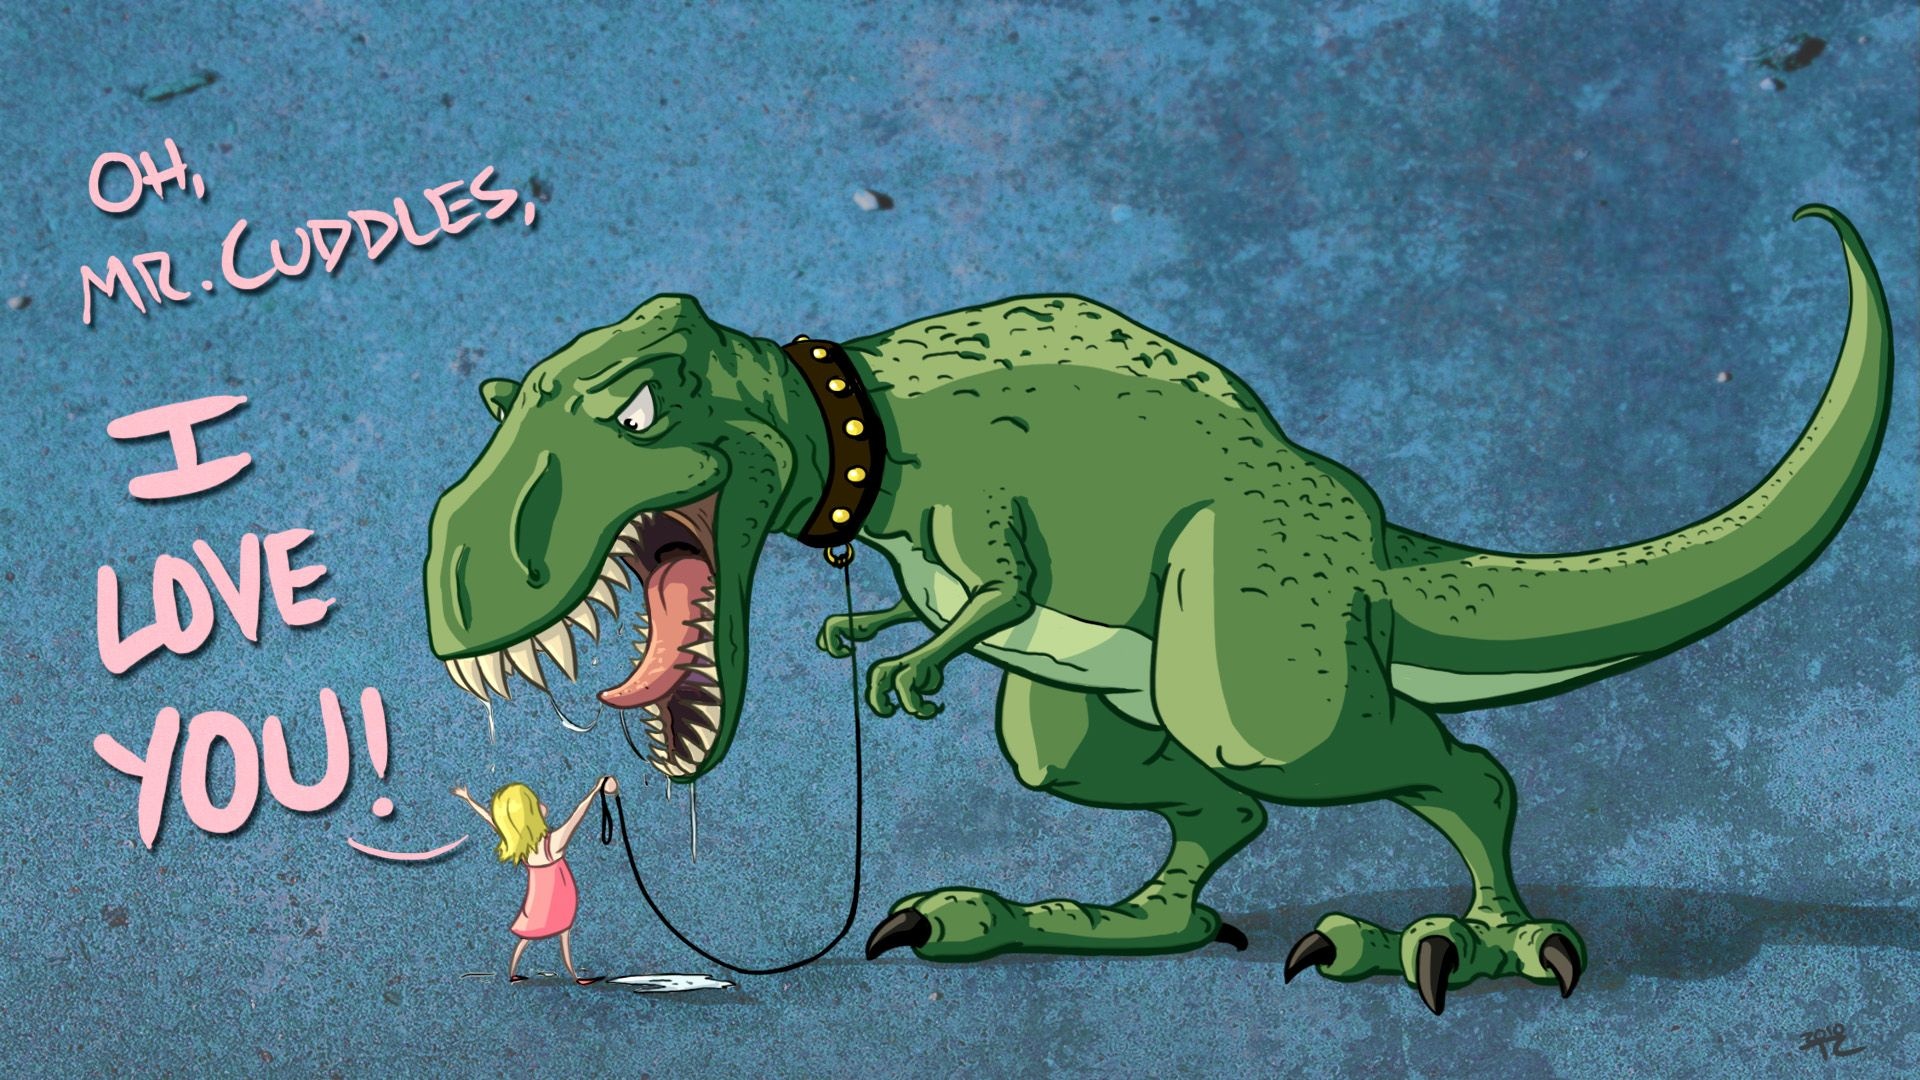 Cartoons Dinosaurs Children Funny Leash Tyrannosaurus Rex